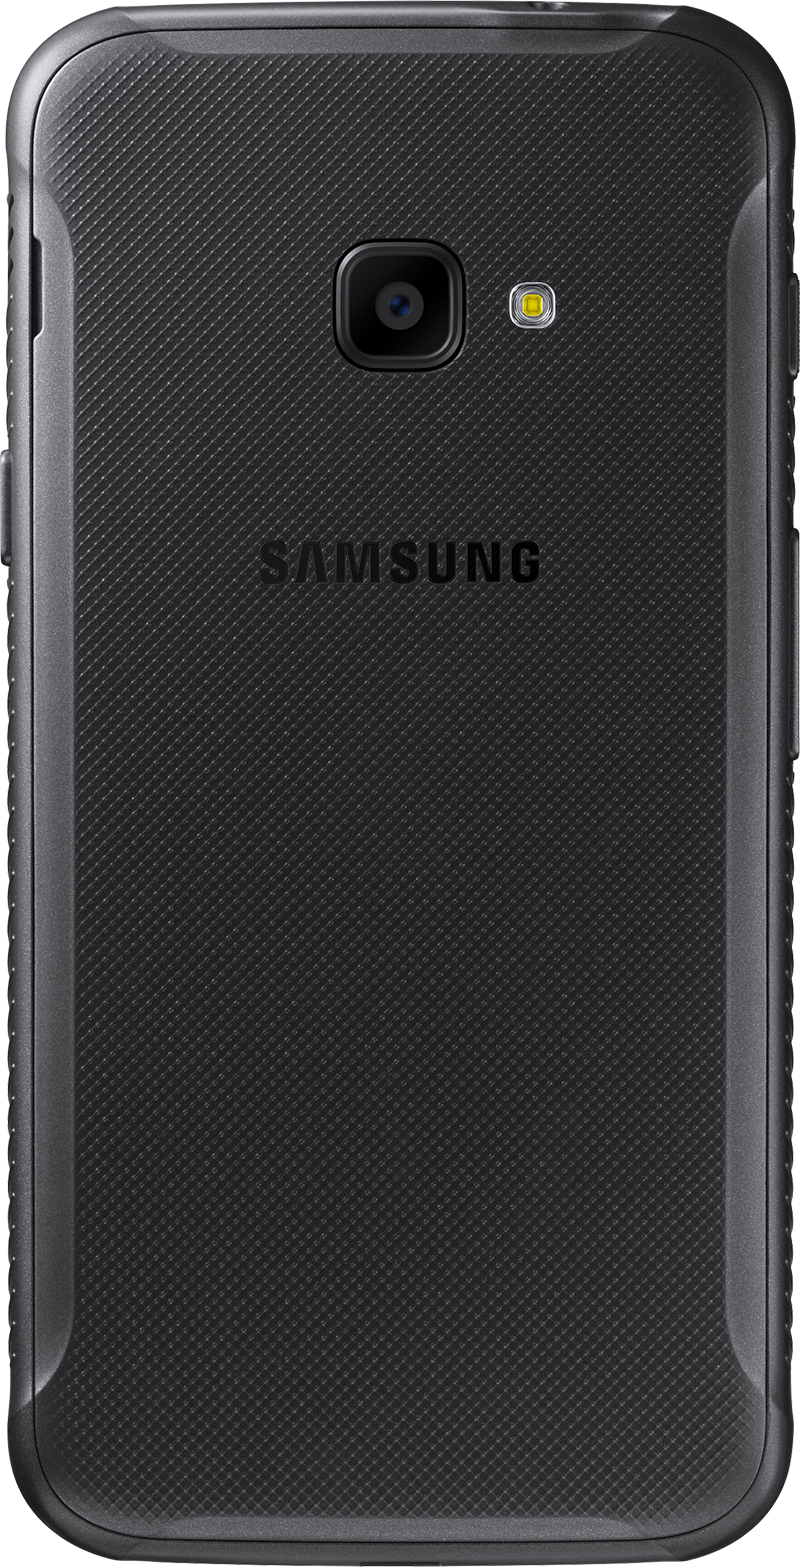 Samsung Galaxy Xcover4 noir 16Go